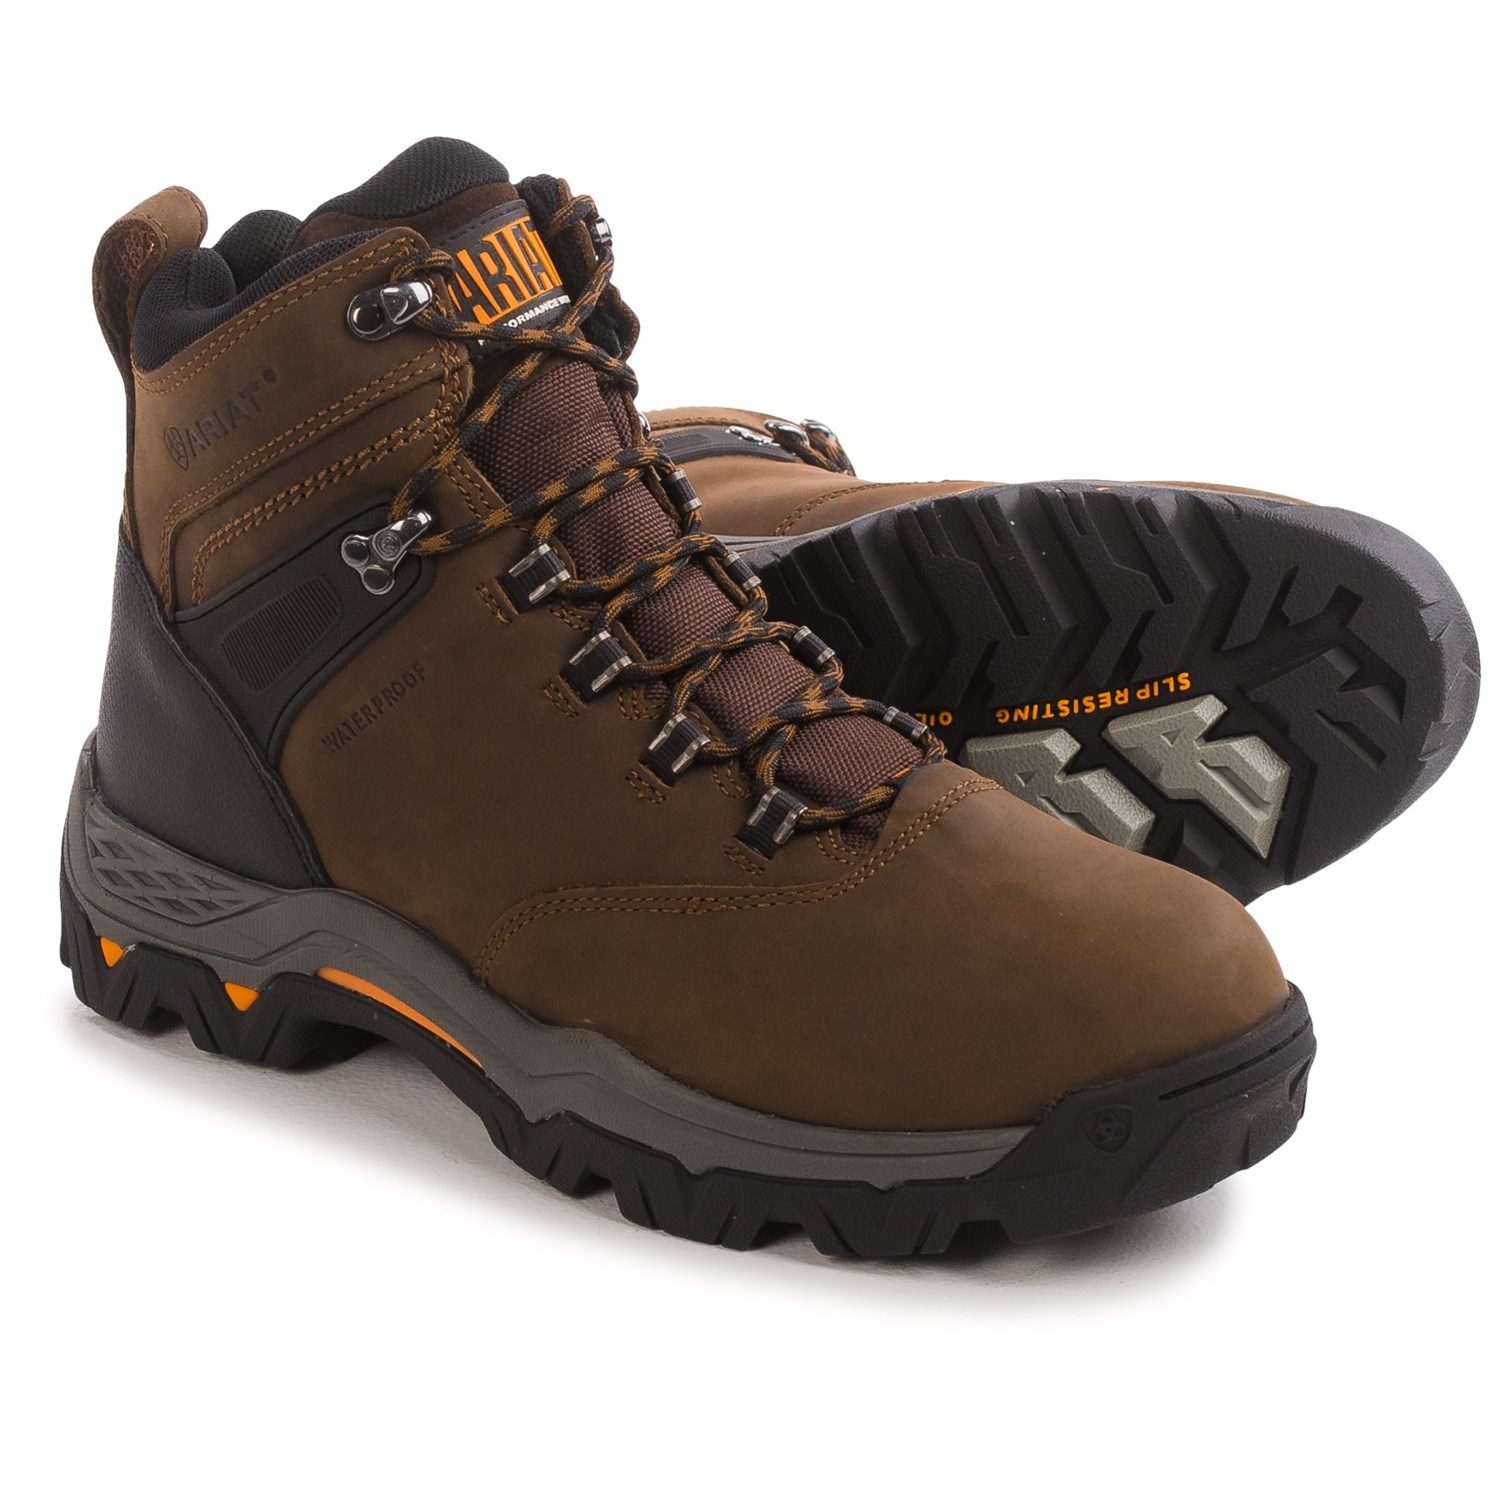 Ariat WorkHog Trek 6” Work Boots (For Men) - Save 71%